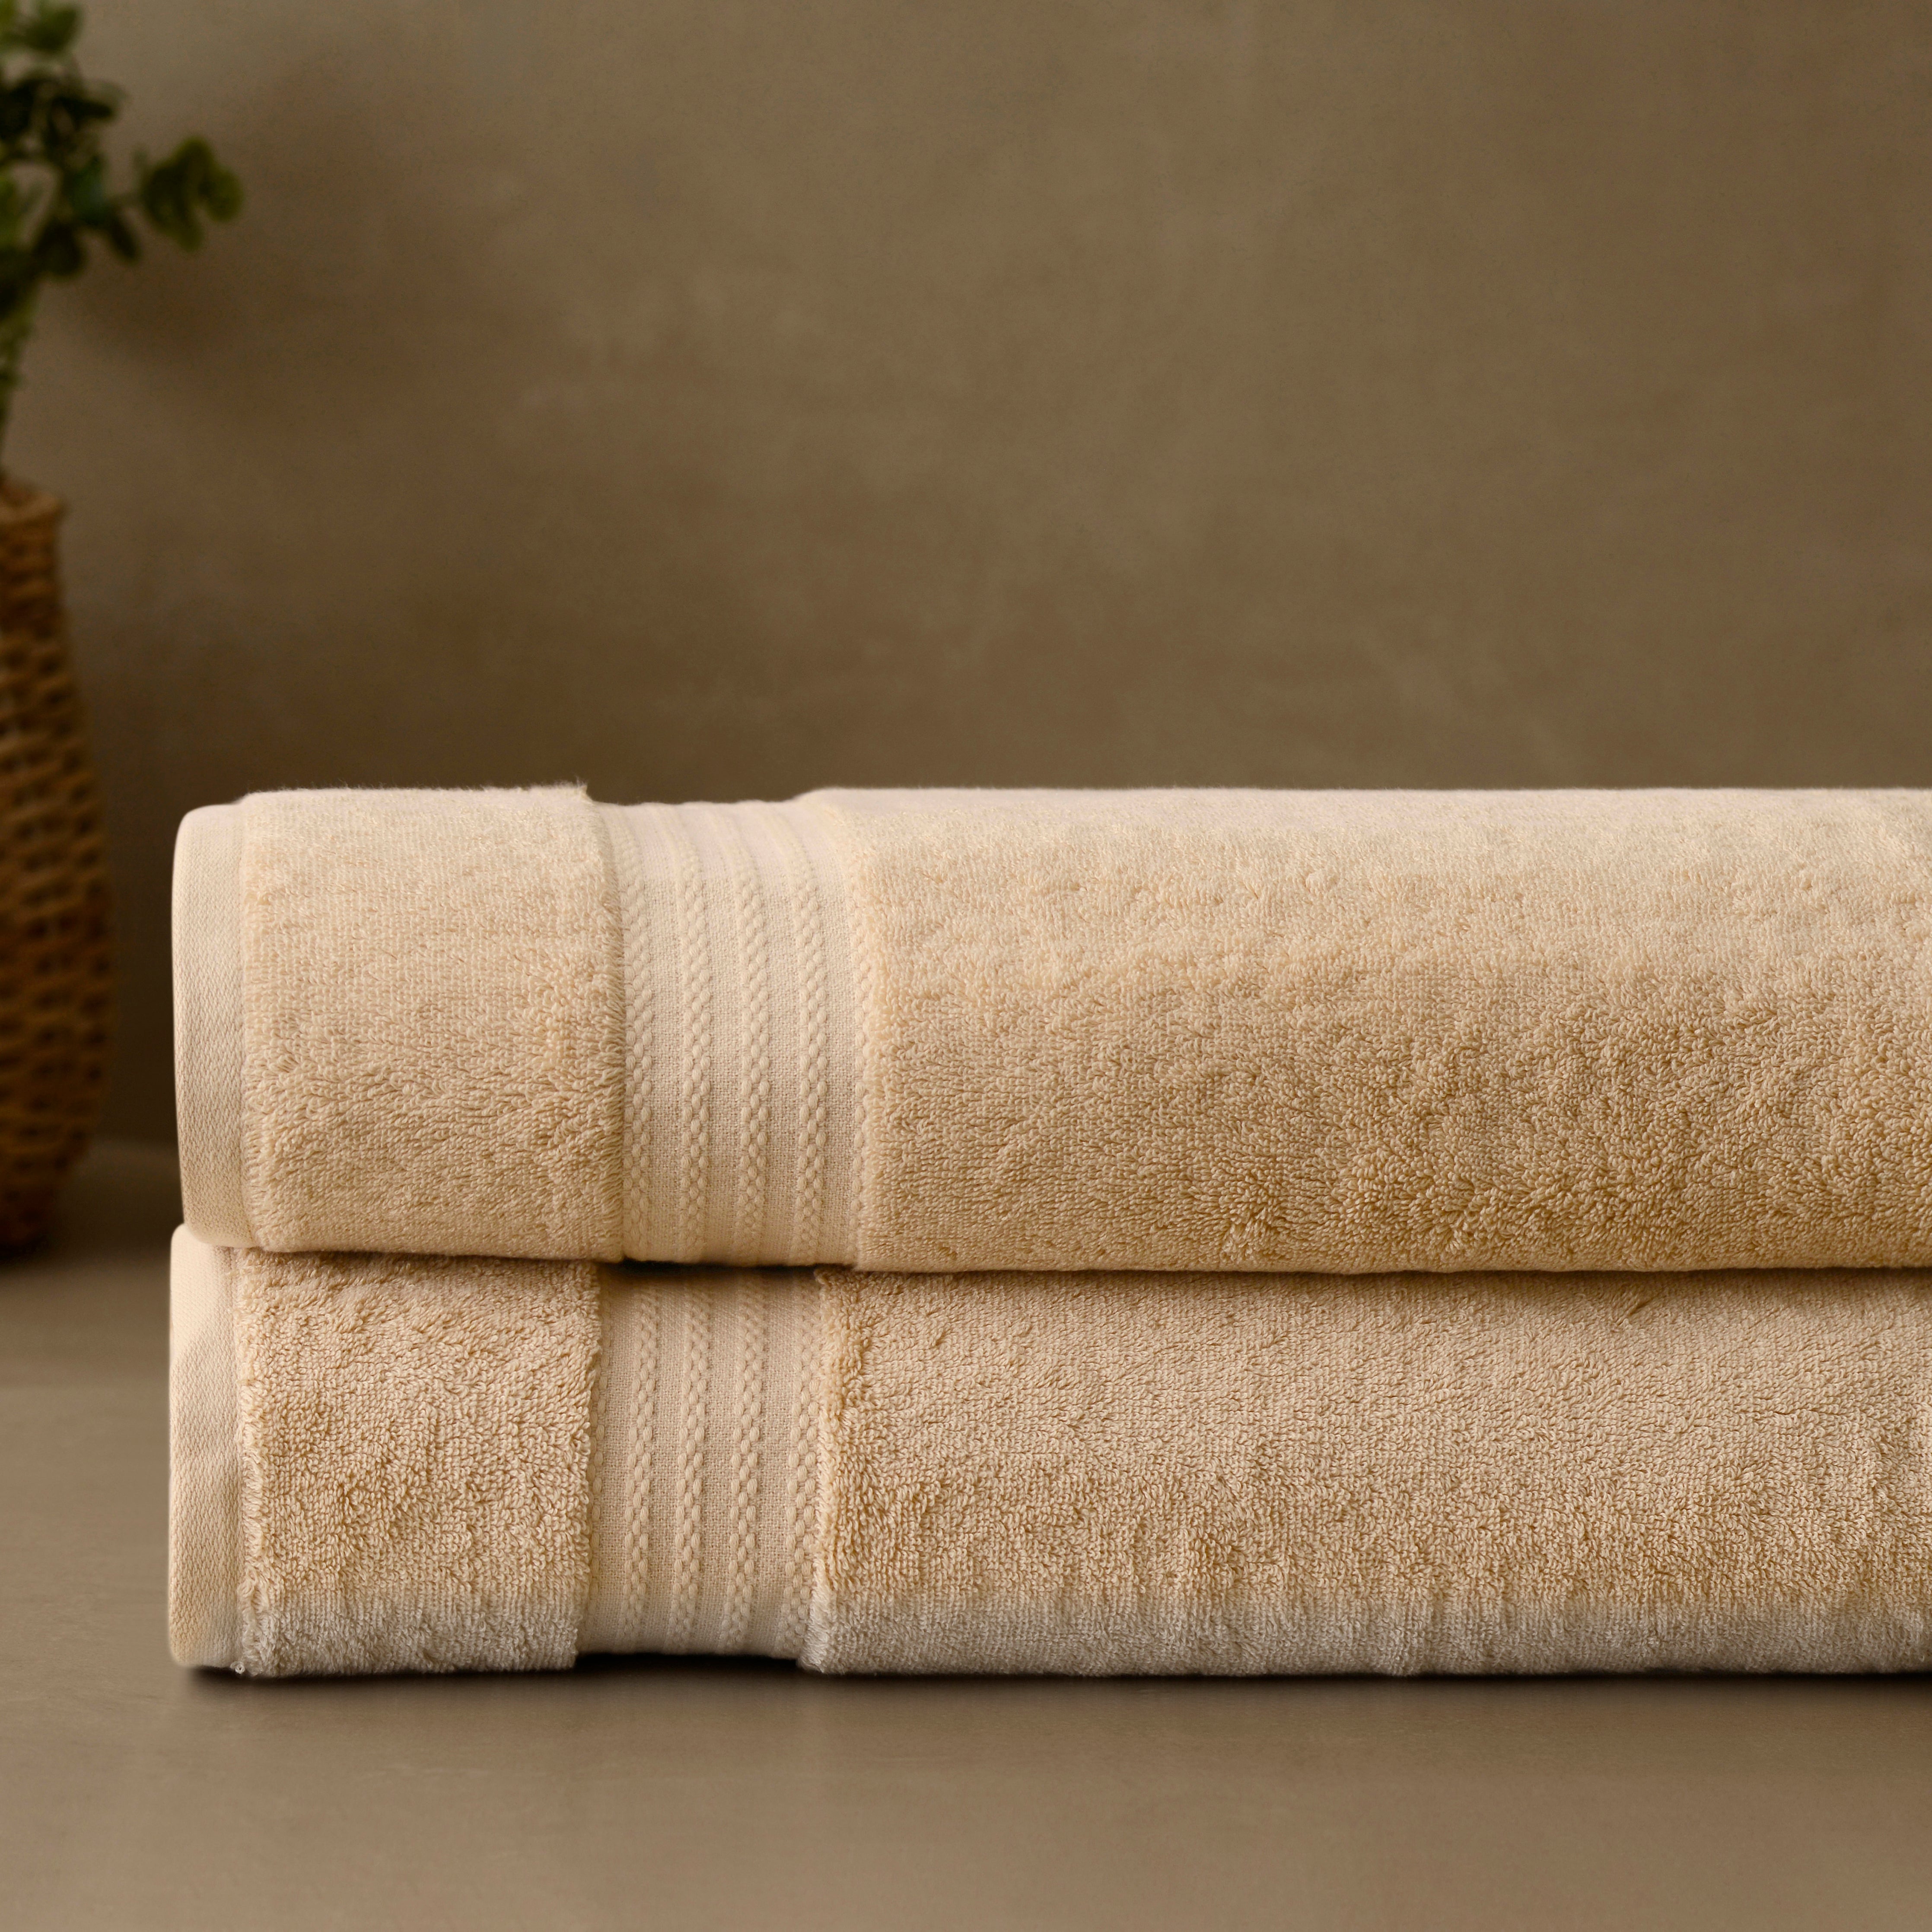 PC Organics Organic Cotton Bath Towel, White - 1 ea